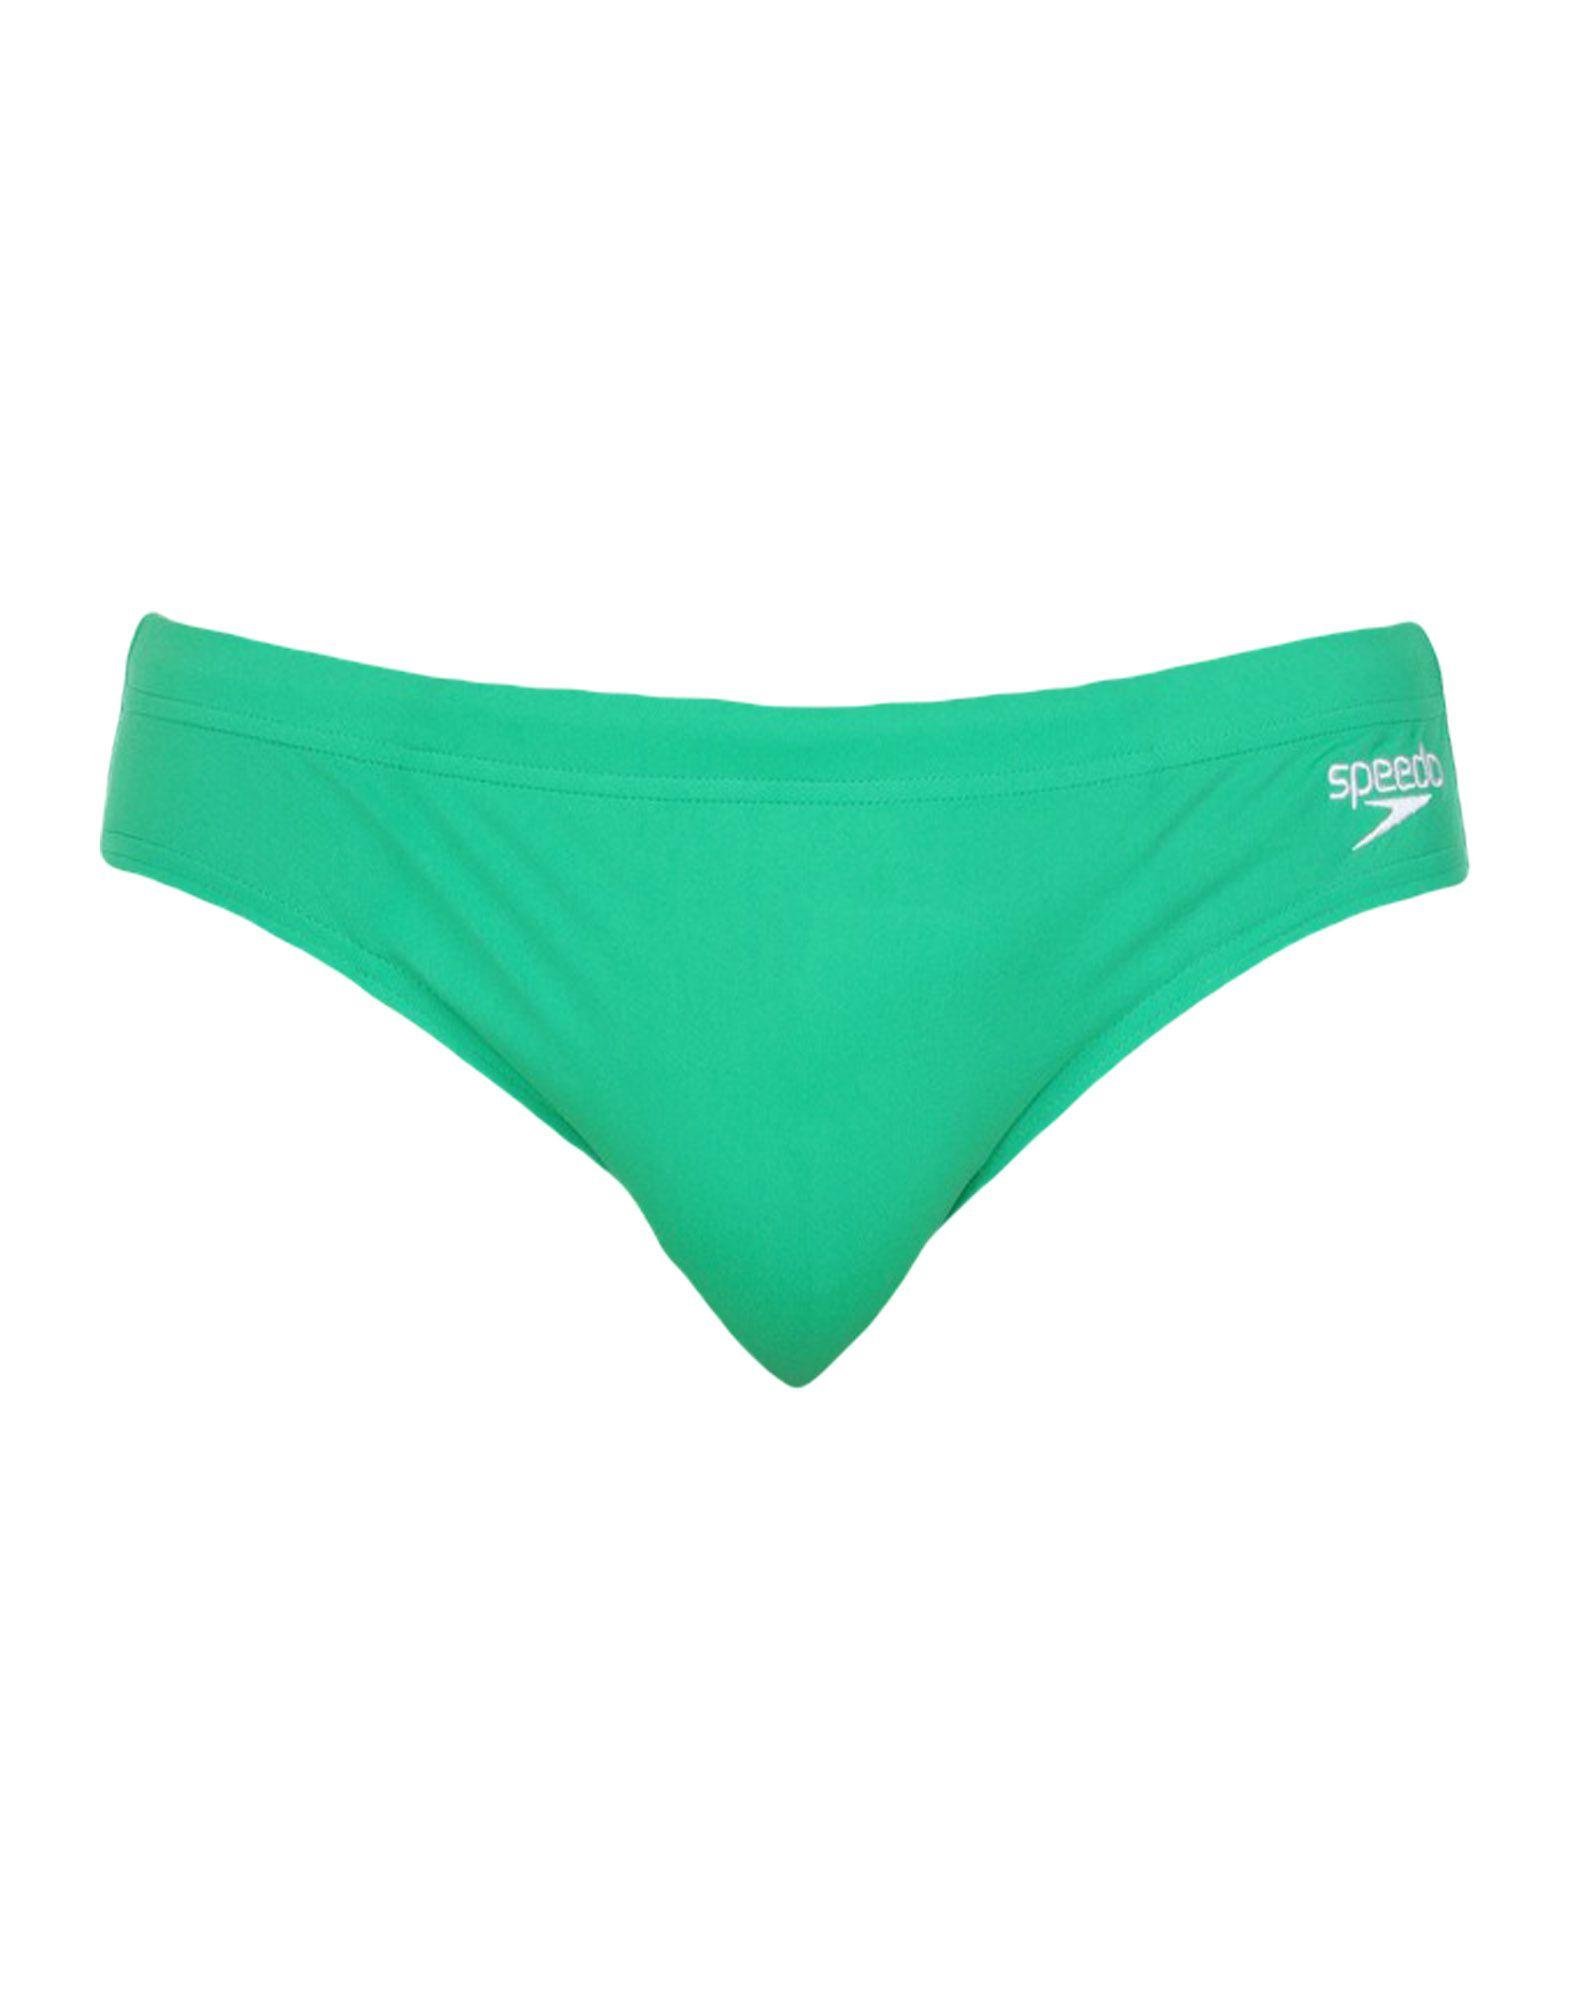 Speedo Swim Brief in Green for Men - Lyst